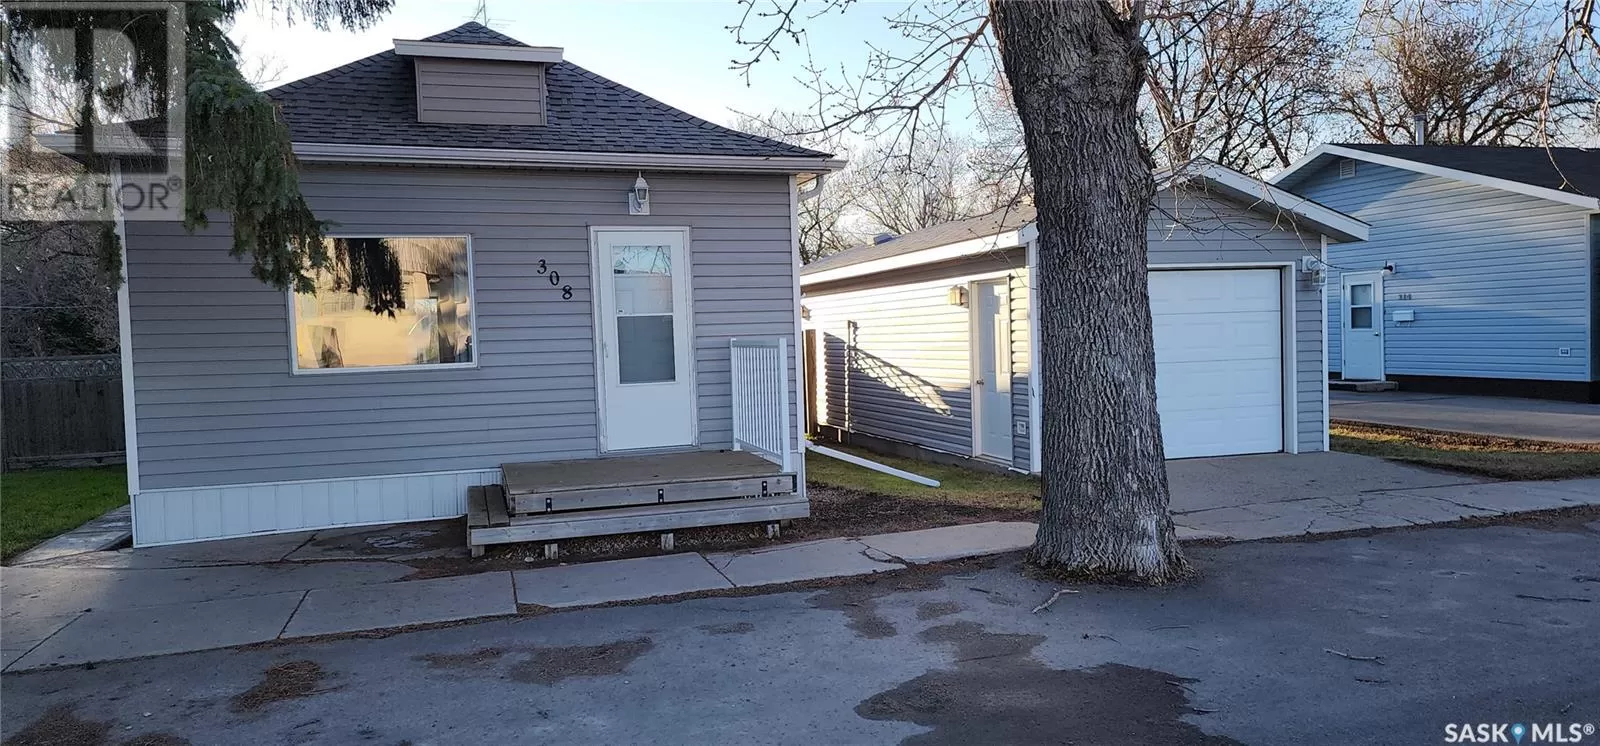 House for rent: 308 Main Street, Odessa, Saskatchewan S0G 3S0